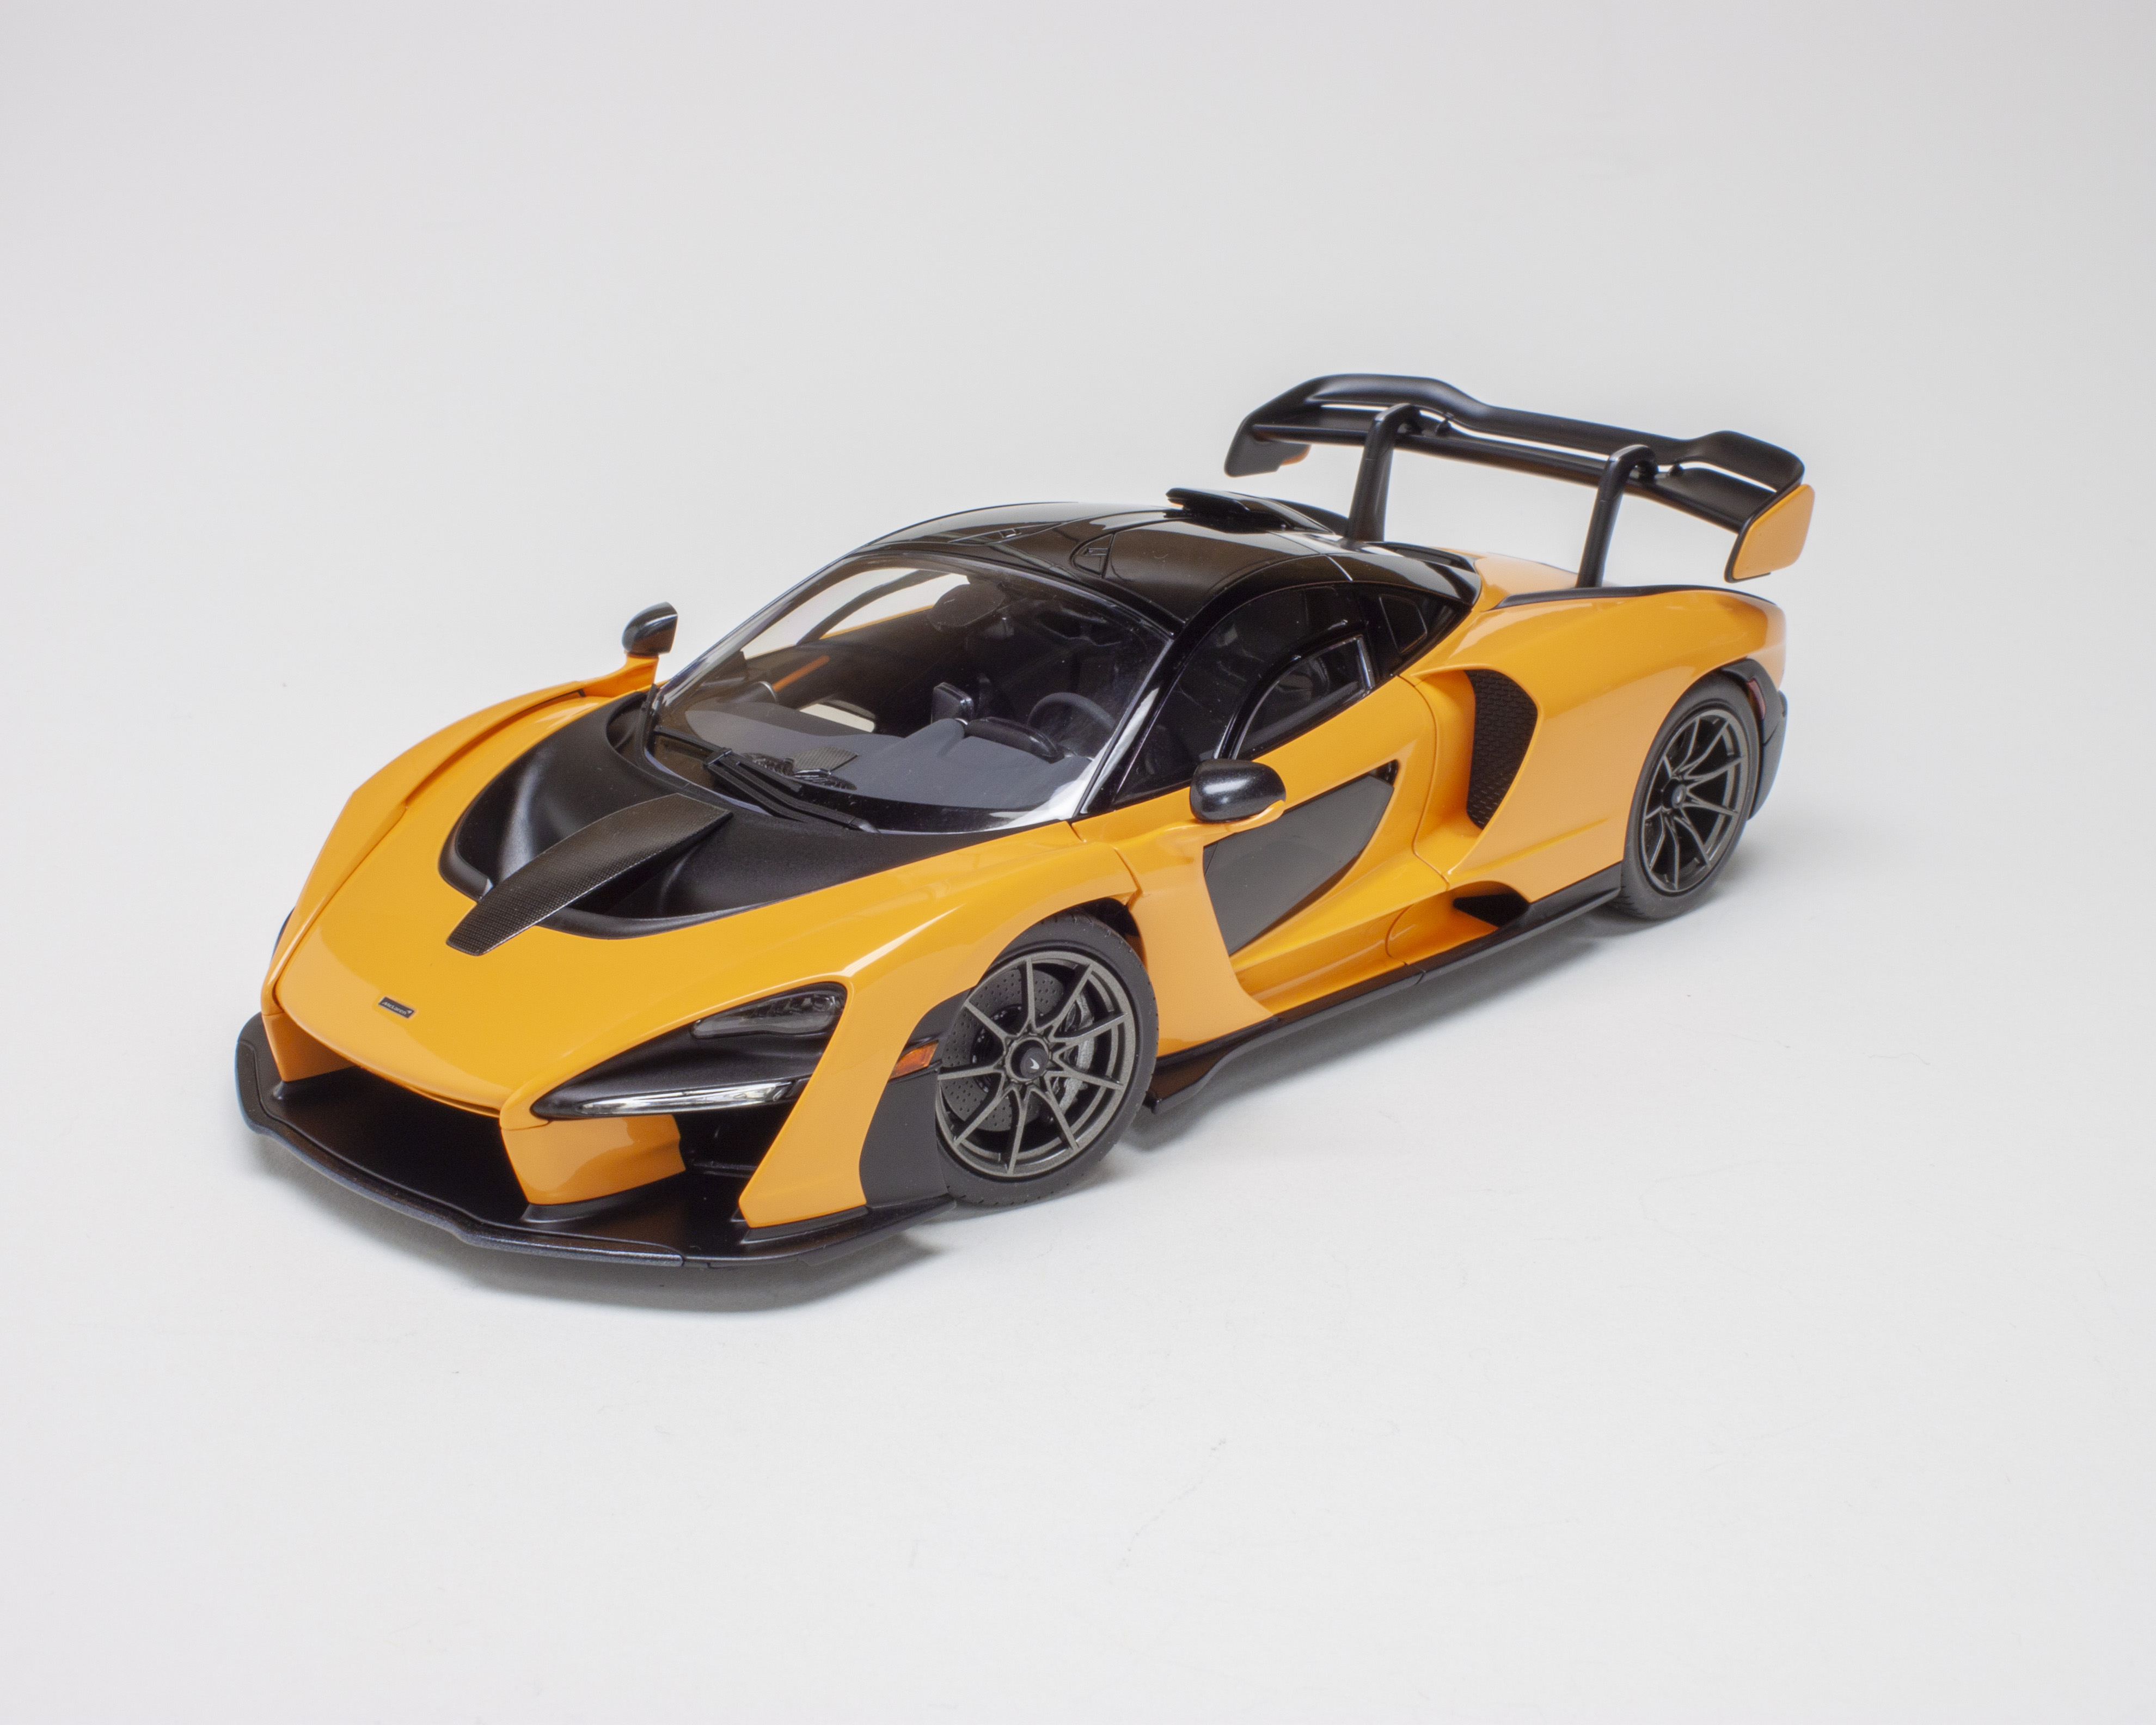 Build review of the Tamiya McLaren Senna scale model car kit